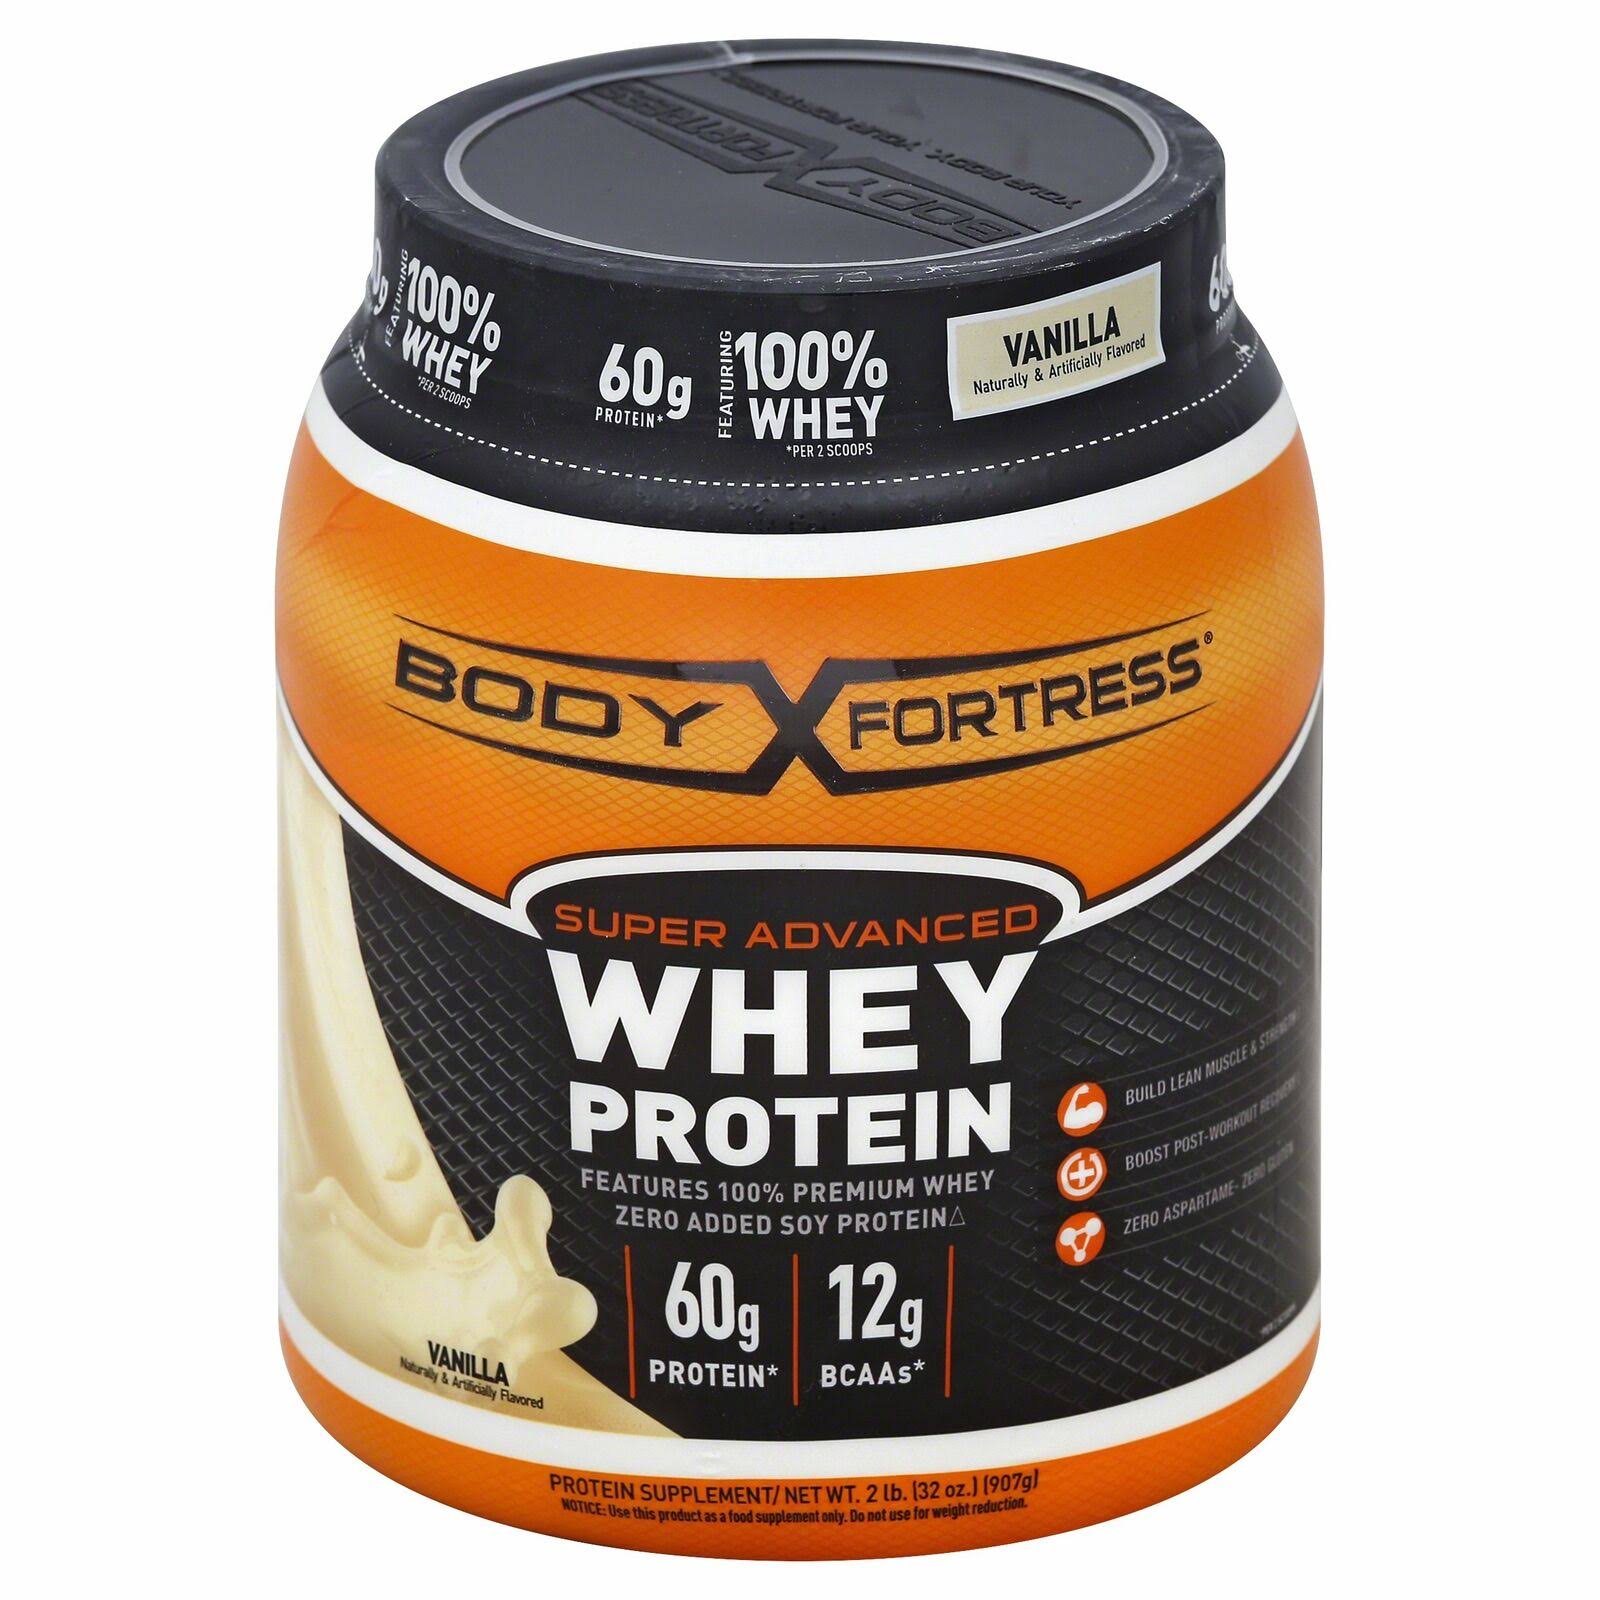 Body Fortress Super Advanced Whey Protein Supplement - Vanilla, 32oz